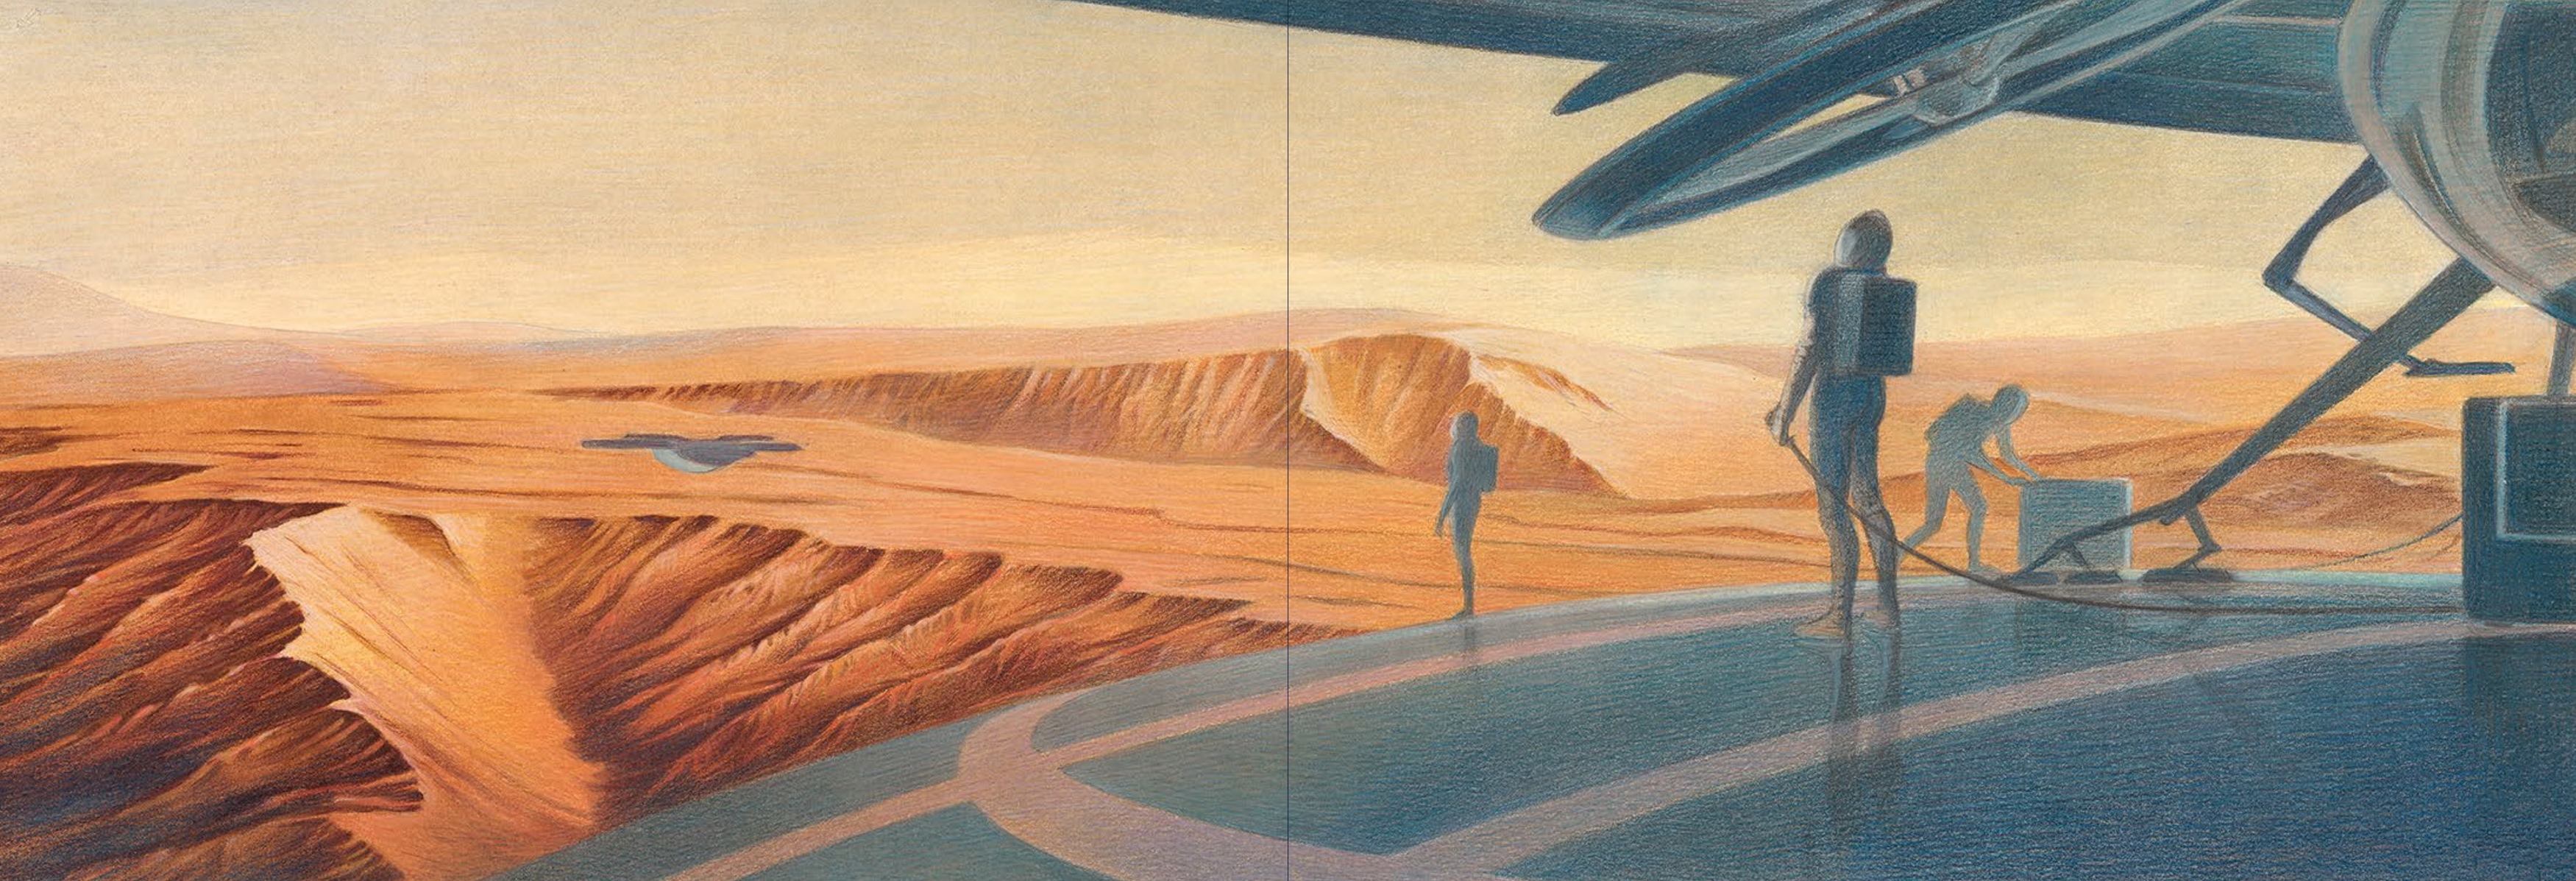 François Schuiten - Louis Vuitton Travel Book: Mars